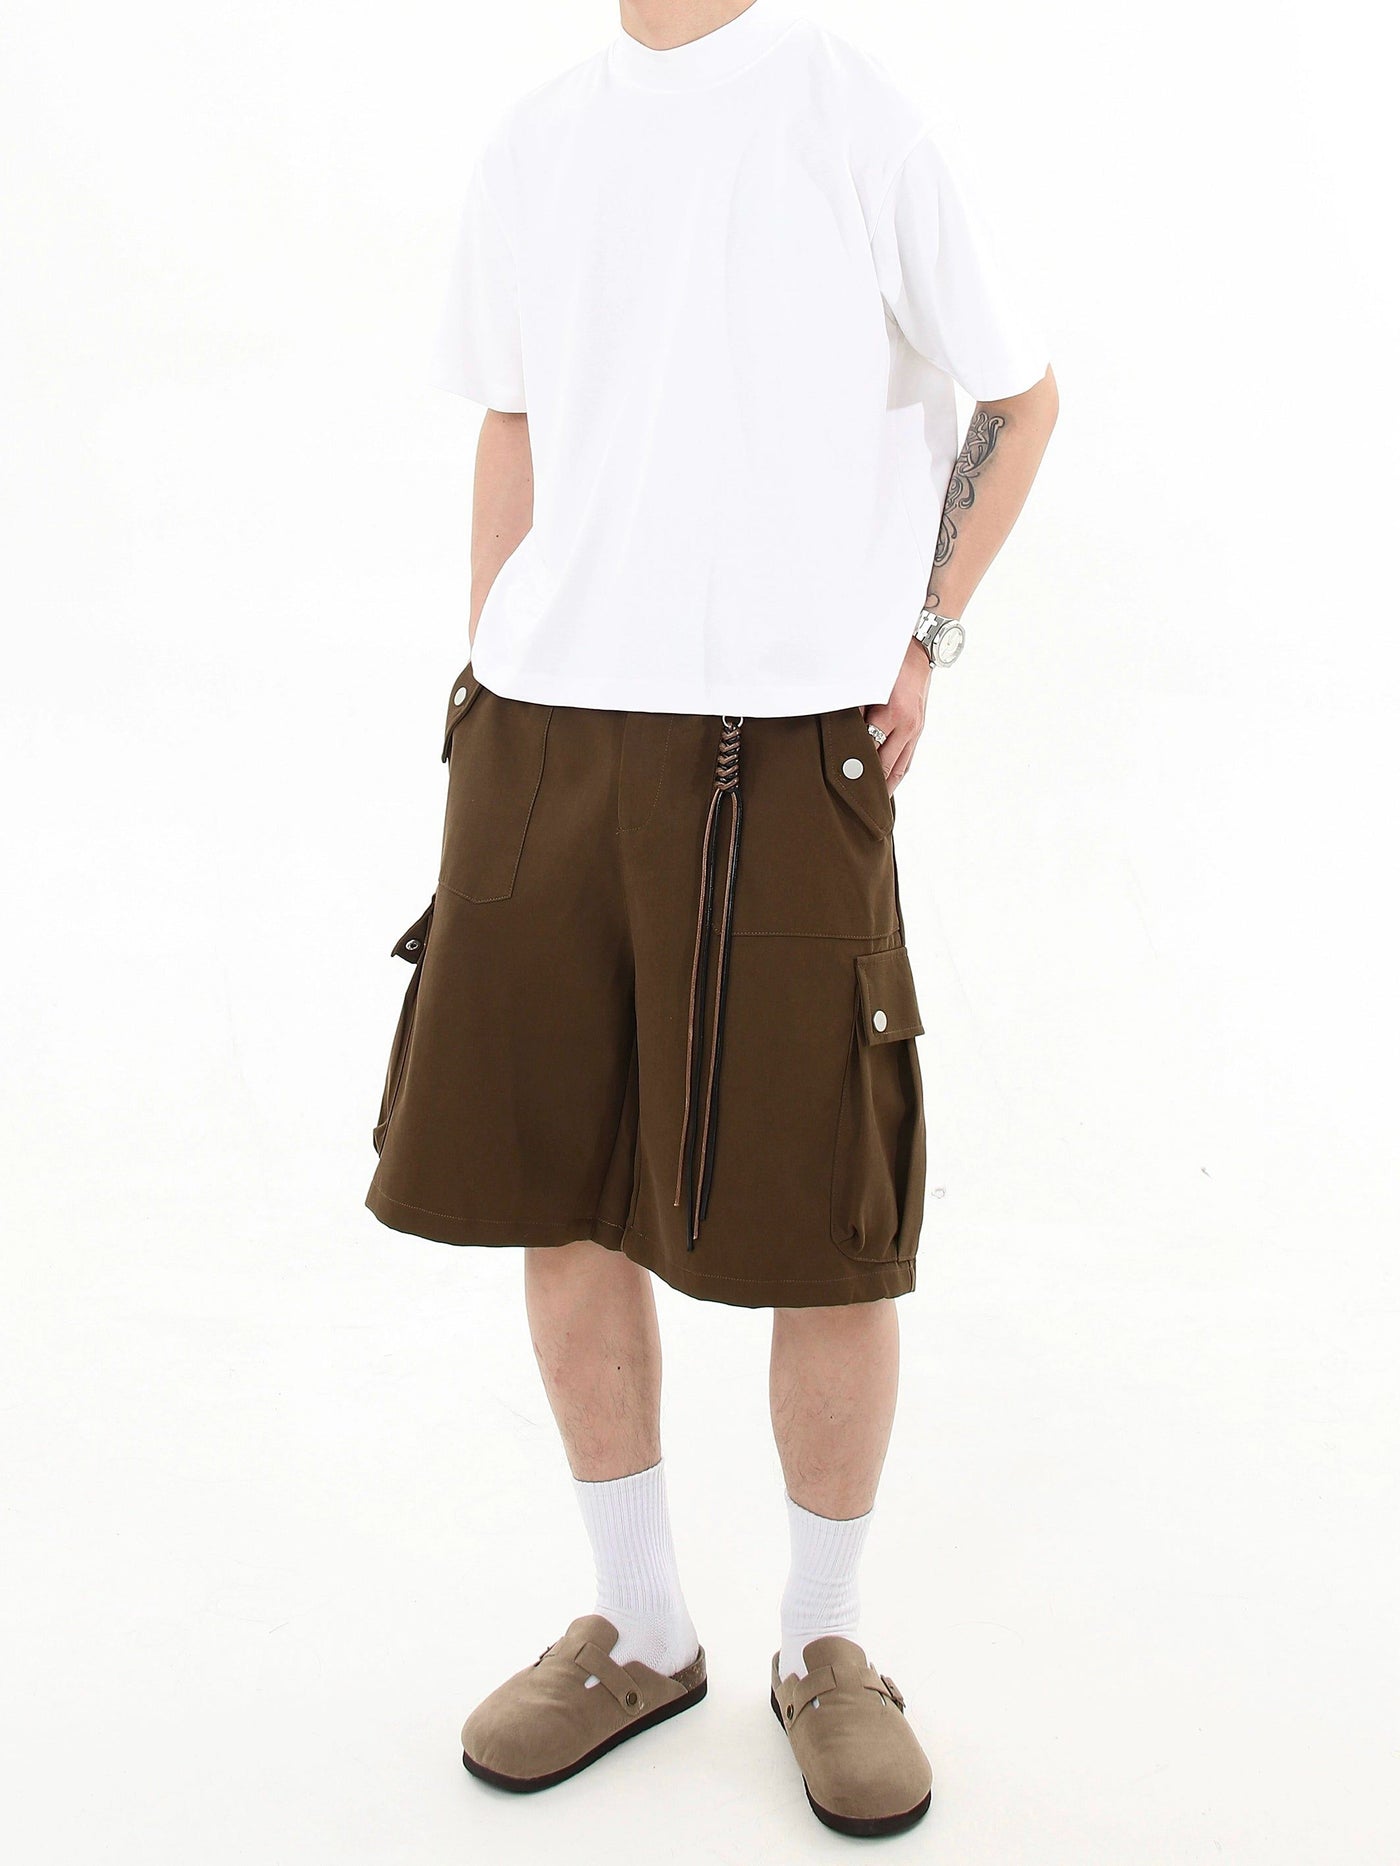 Larnyard Oversized Pocket Cargo Shorts Korean Street Fashion Shorts By Blacklists Shop Online at OH Vault